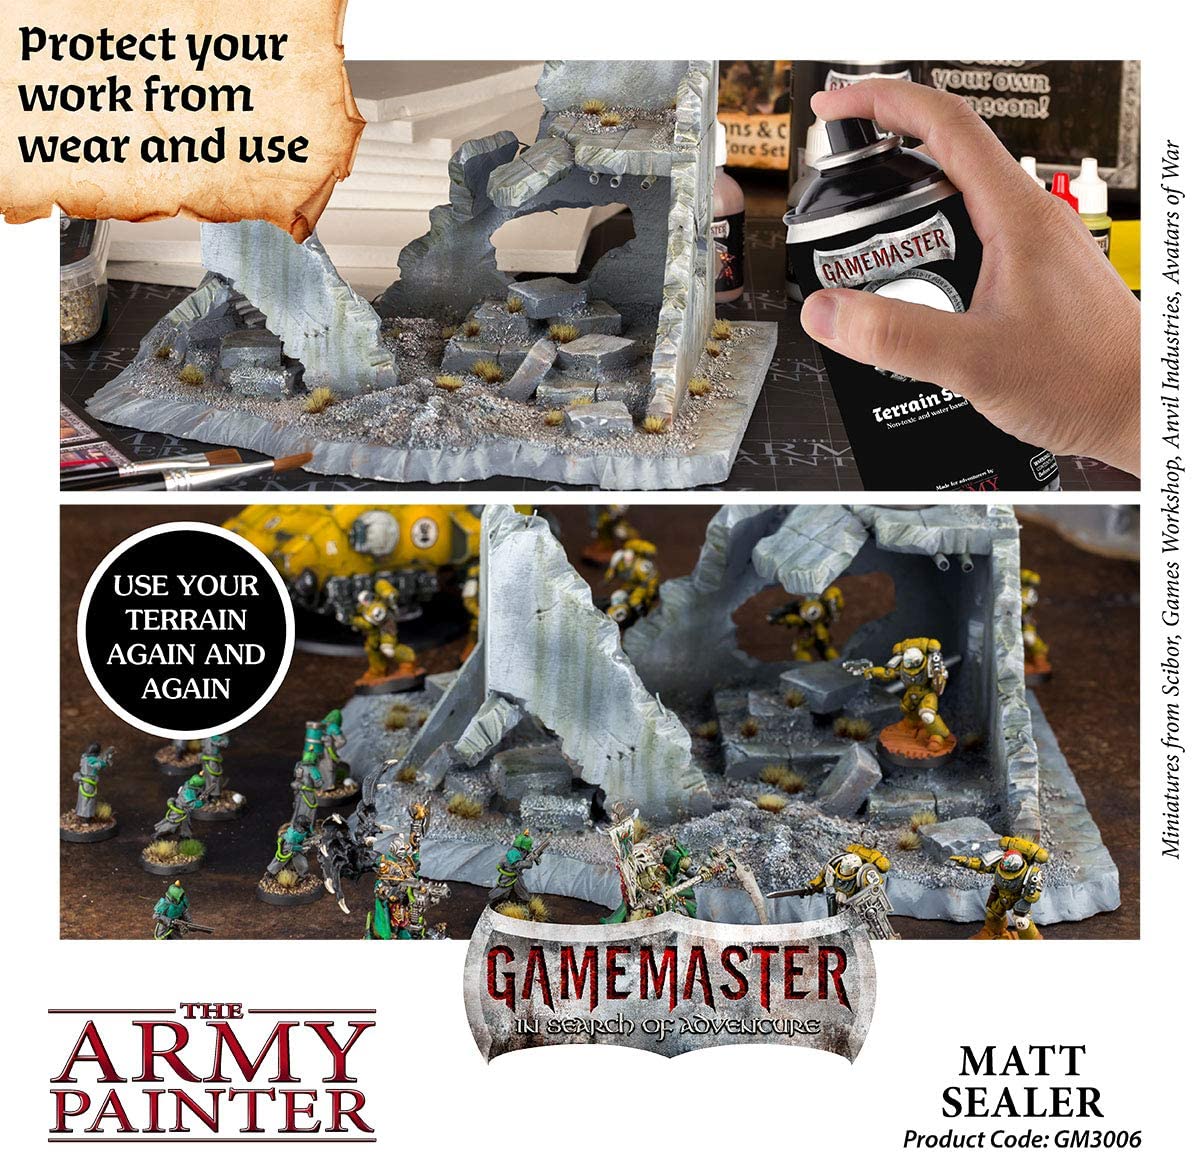 The Army Painter - Gamemaster: Matt Sealer